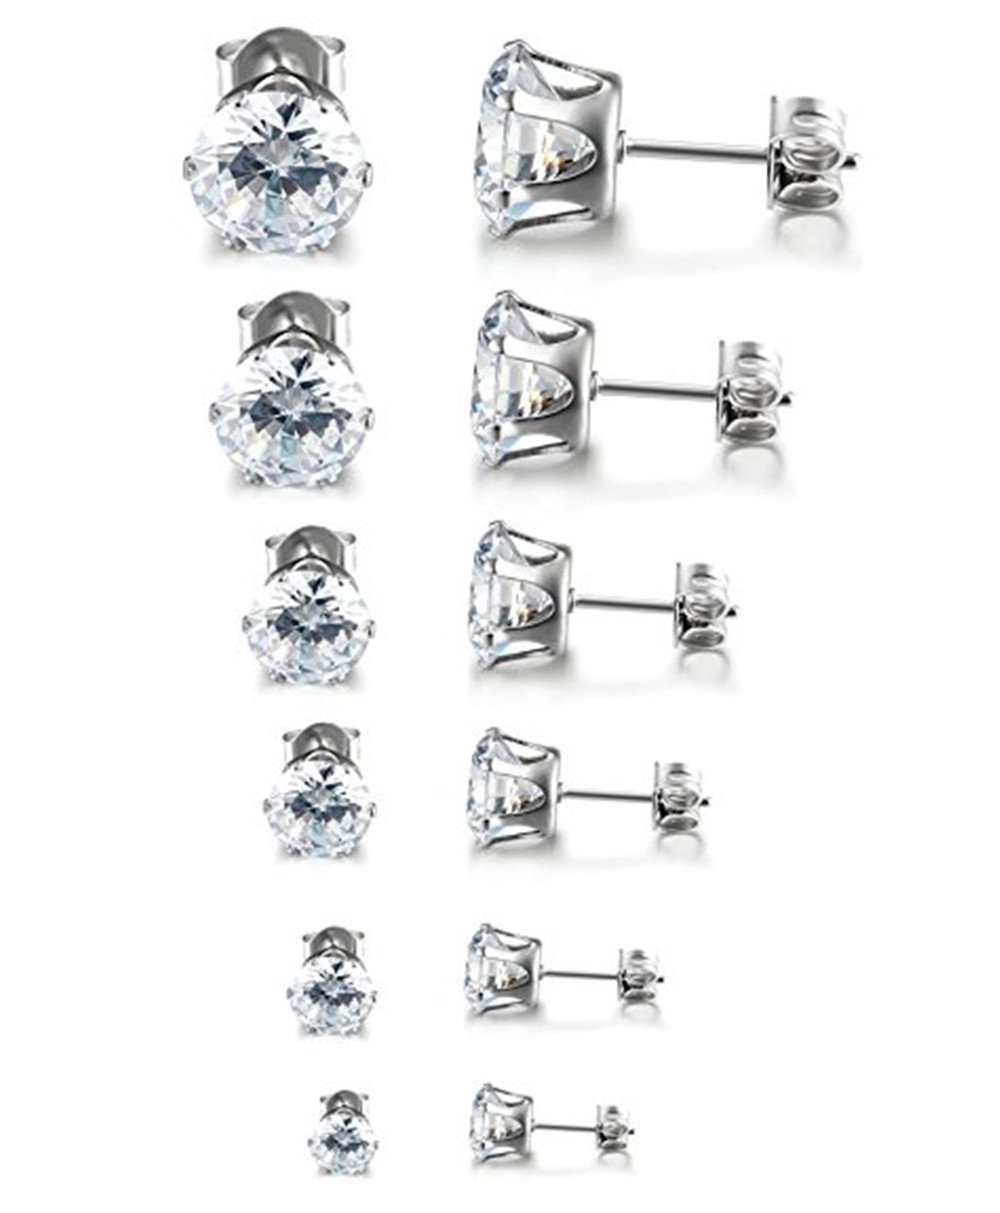 Besteel 20 Pairs Stainless Steel Black Stud Earrings for Men Women Cool CZ Earring Set Ear Jewelry 3-6mm (F:6 Pairs Round)